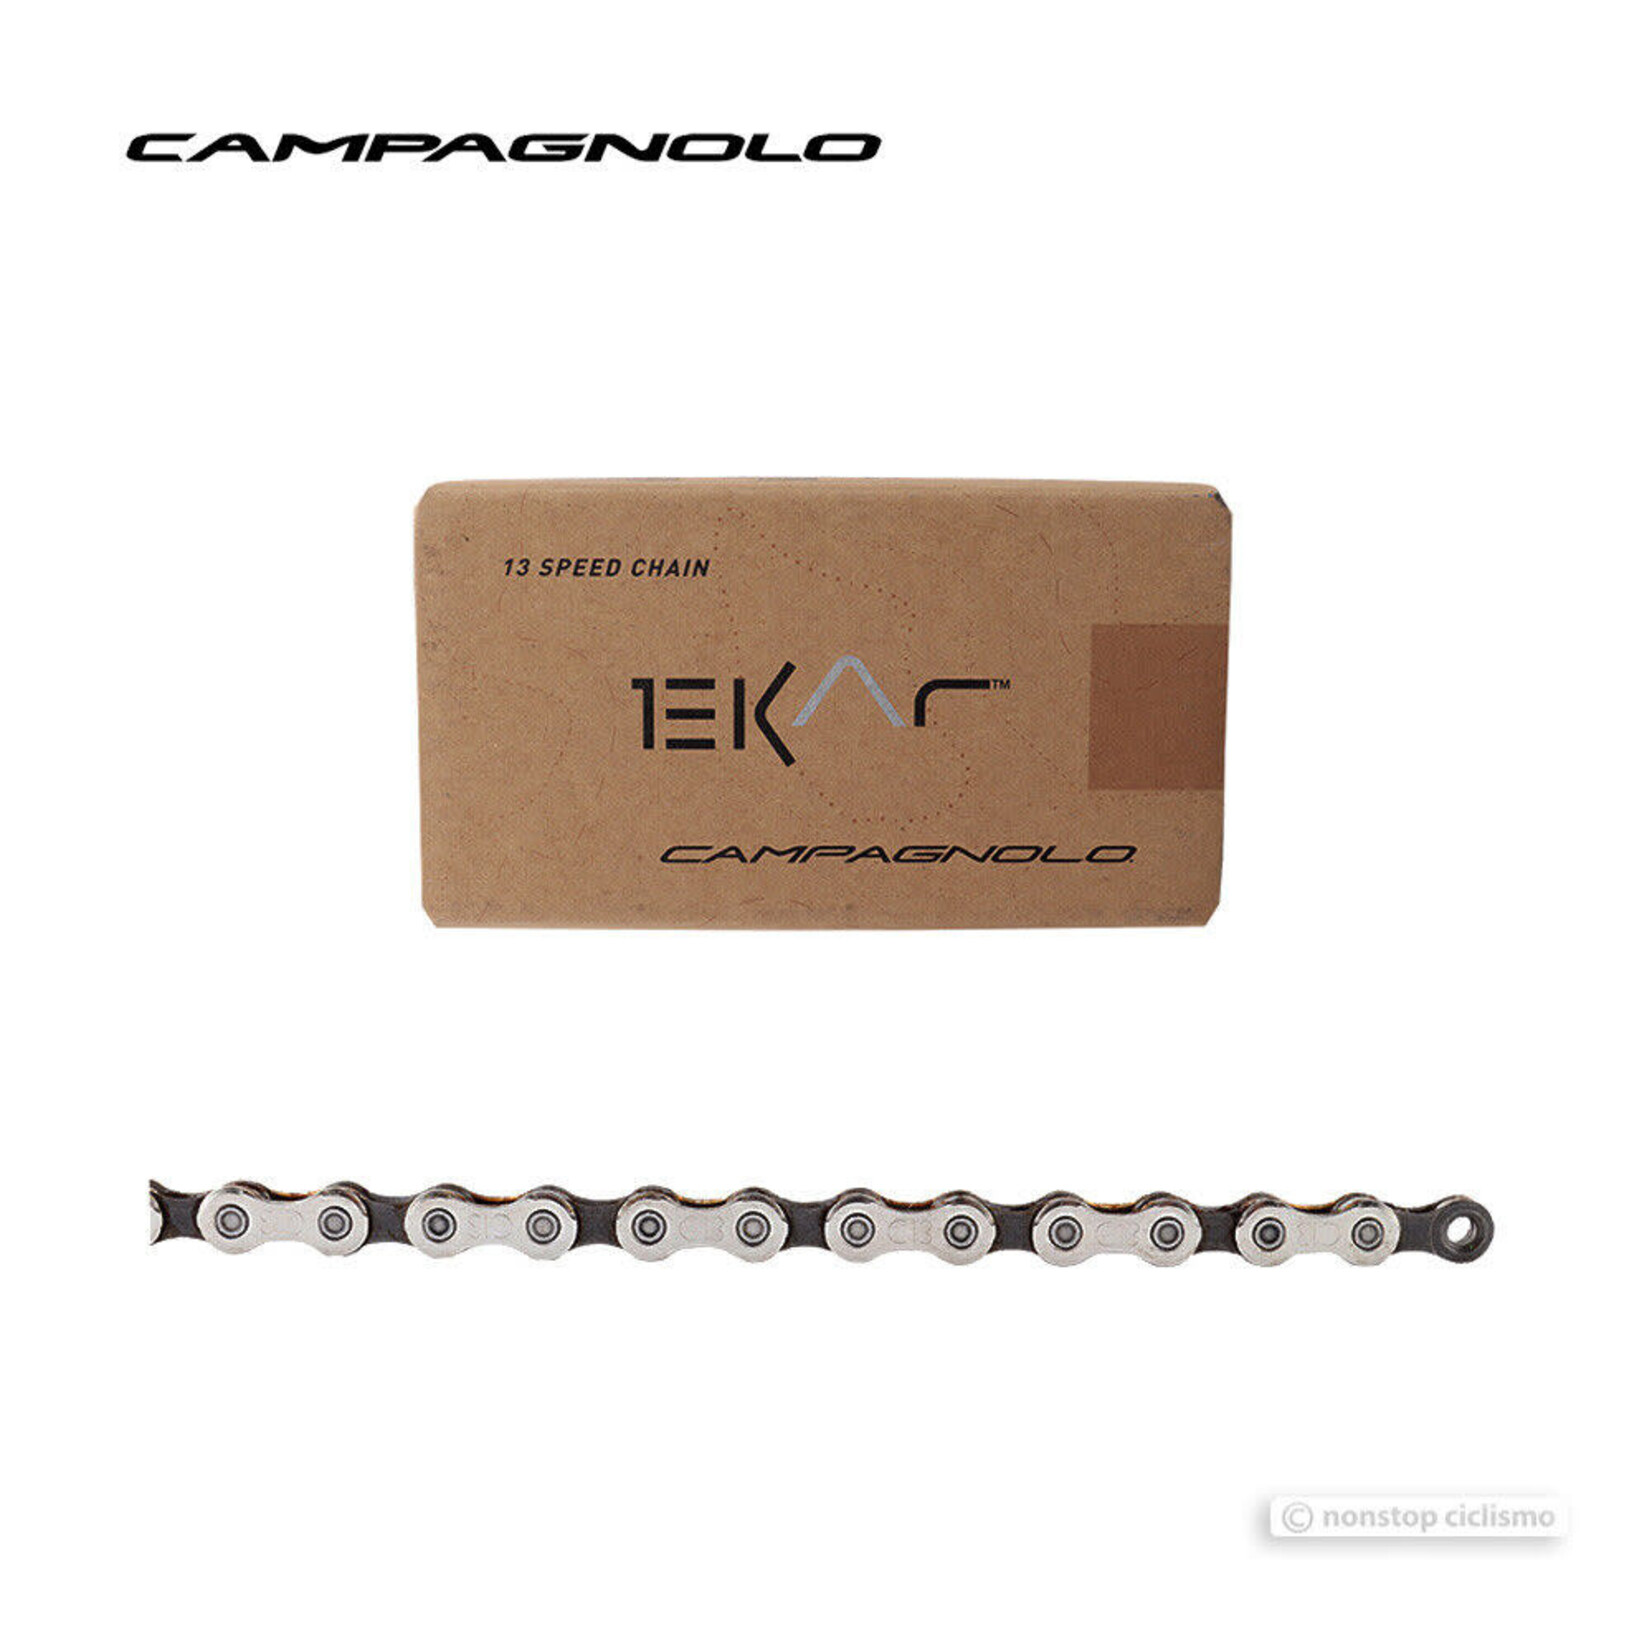 Campagnolo Chain EKAR 13 Speed